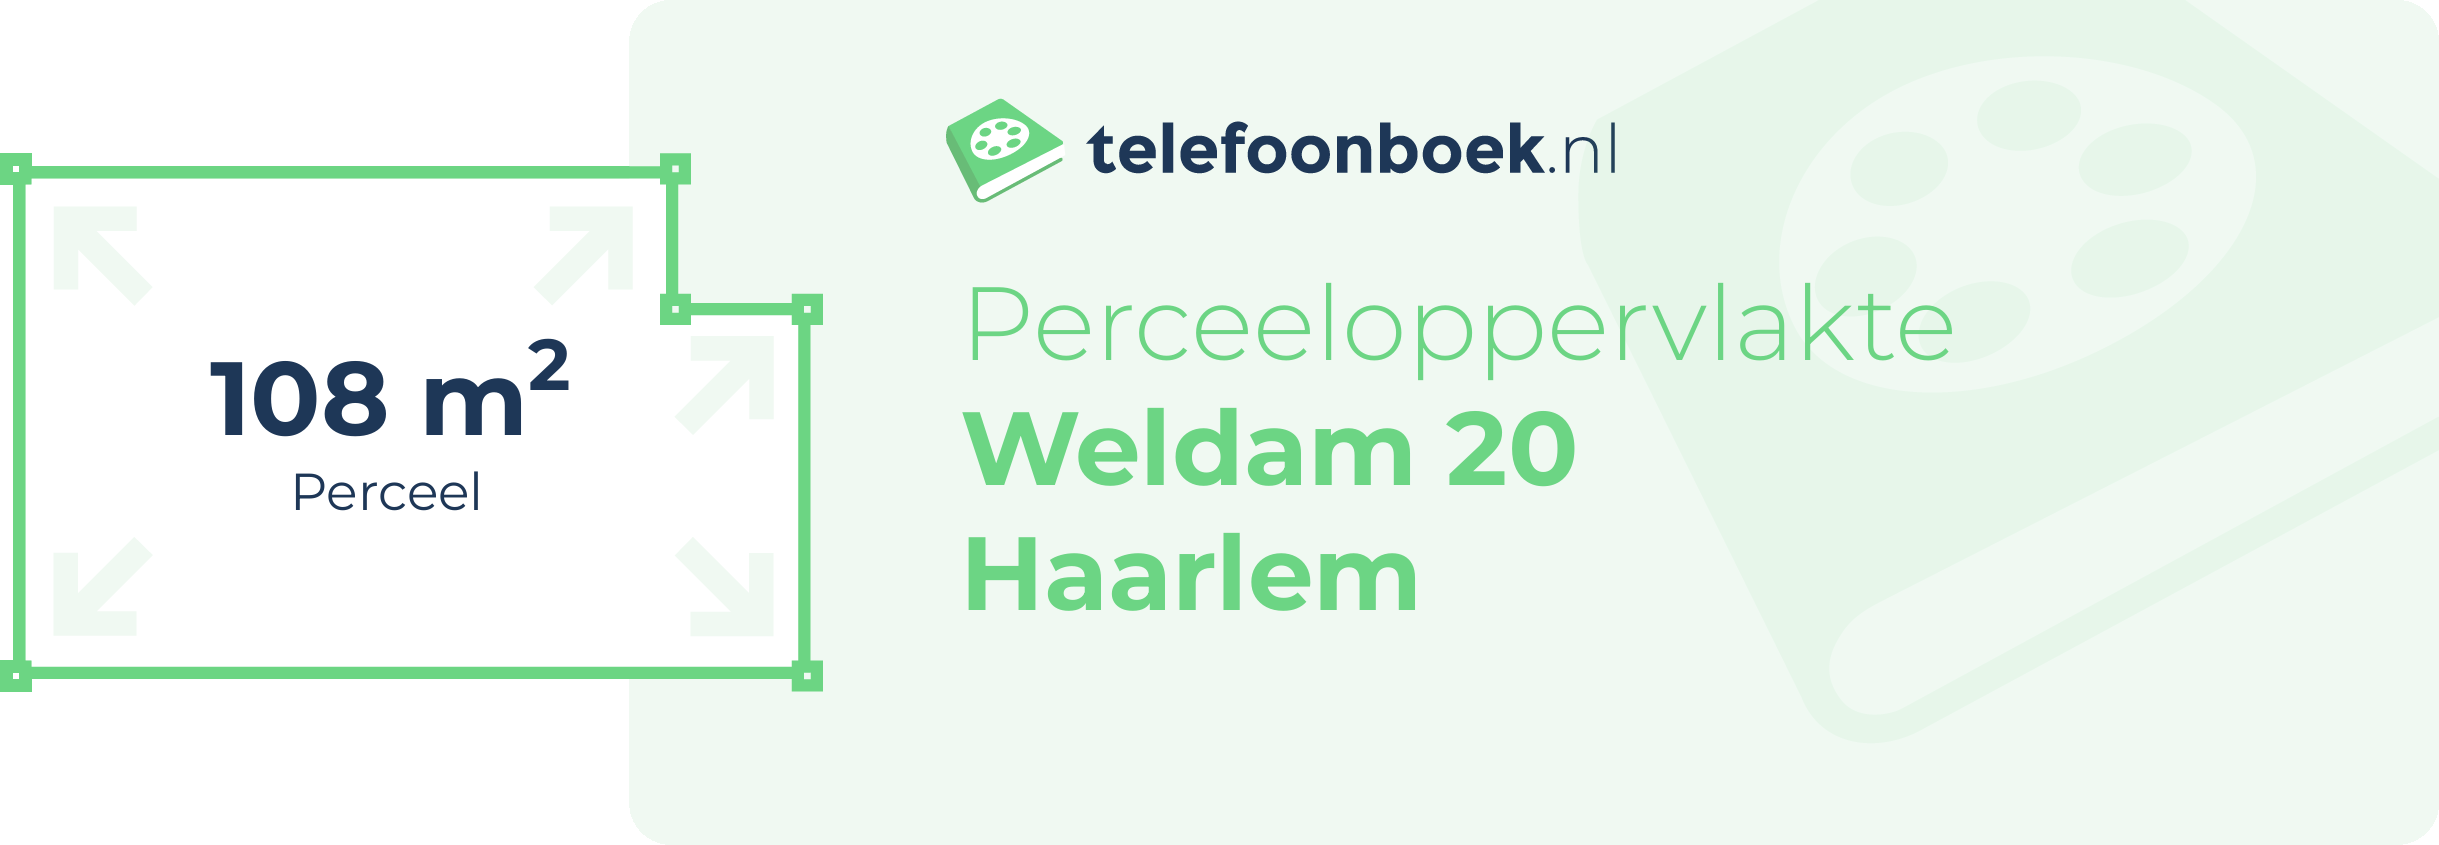 Perceeloppervlakte Weldam 20 Haarlem